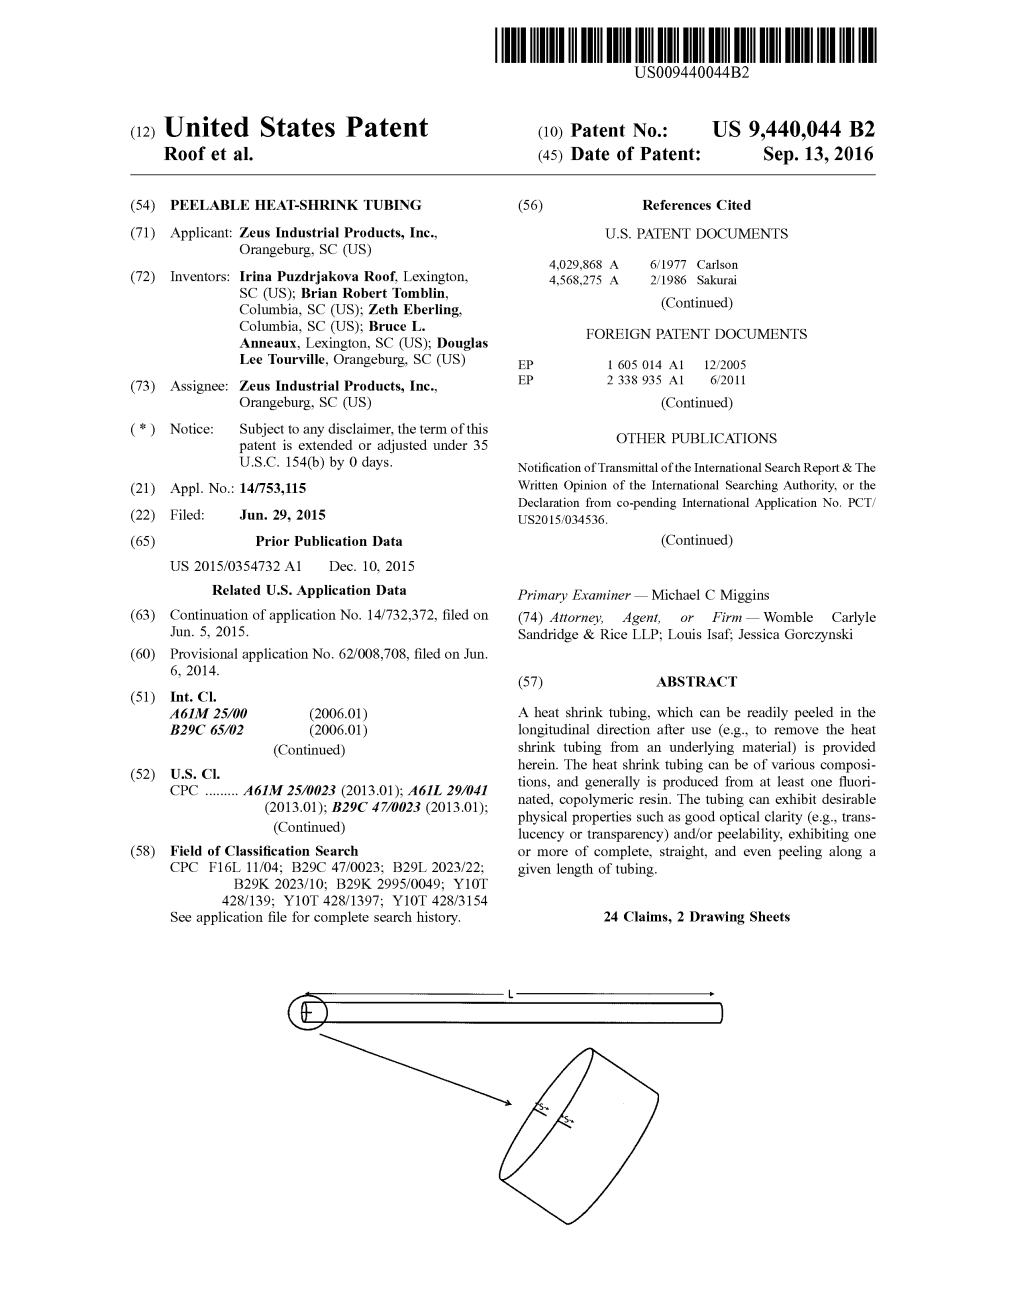 (12) United States Patent (10) Patent No.: US 9,440,044 B2 Roof Et Al